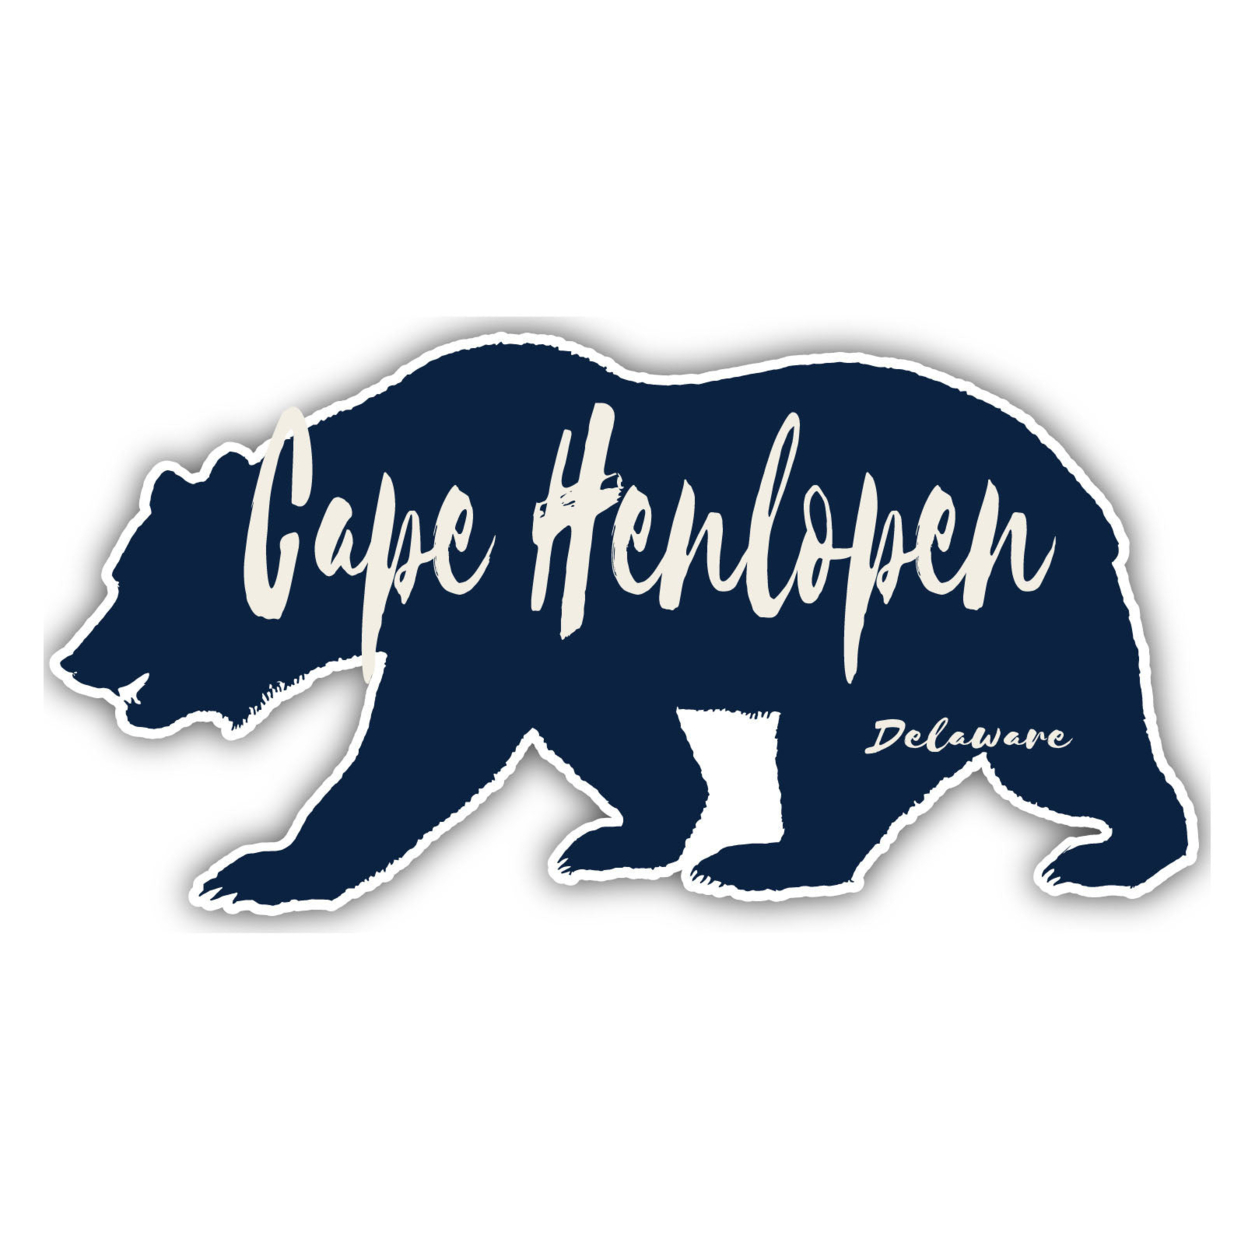 Cape Henlopen Delaware Souvenir Decorative Stickers (Choose Theme And Size) - 4-Pack, 10-Inch, Bear